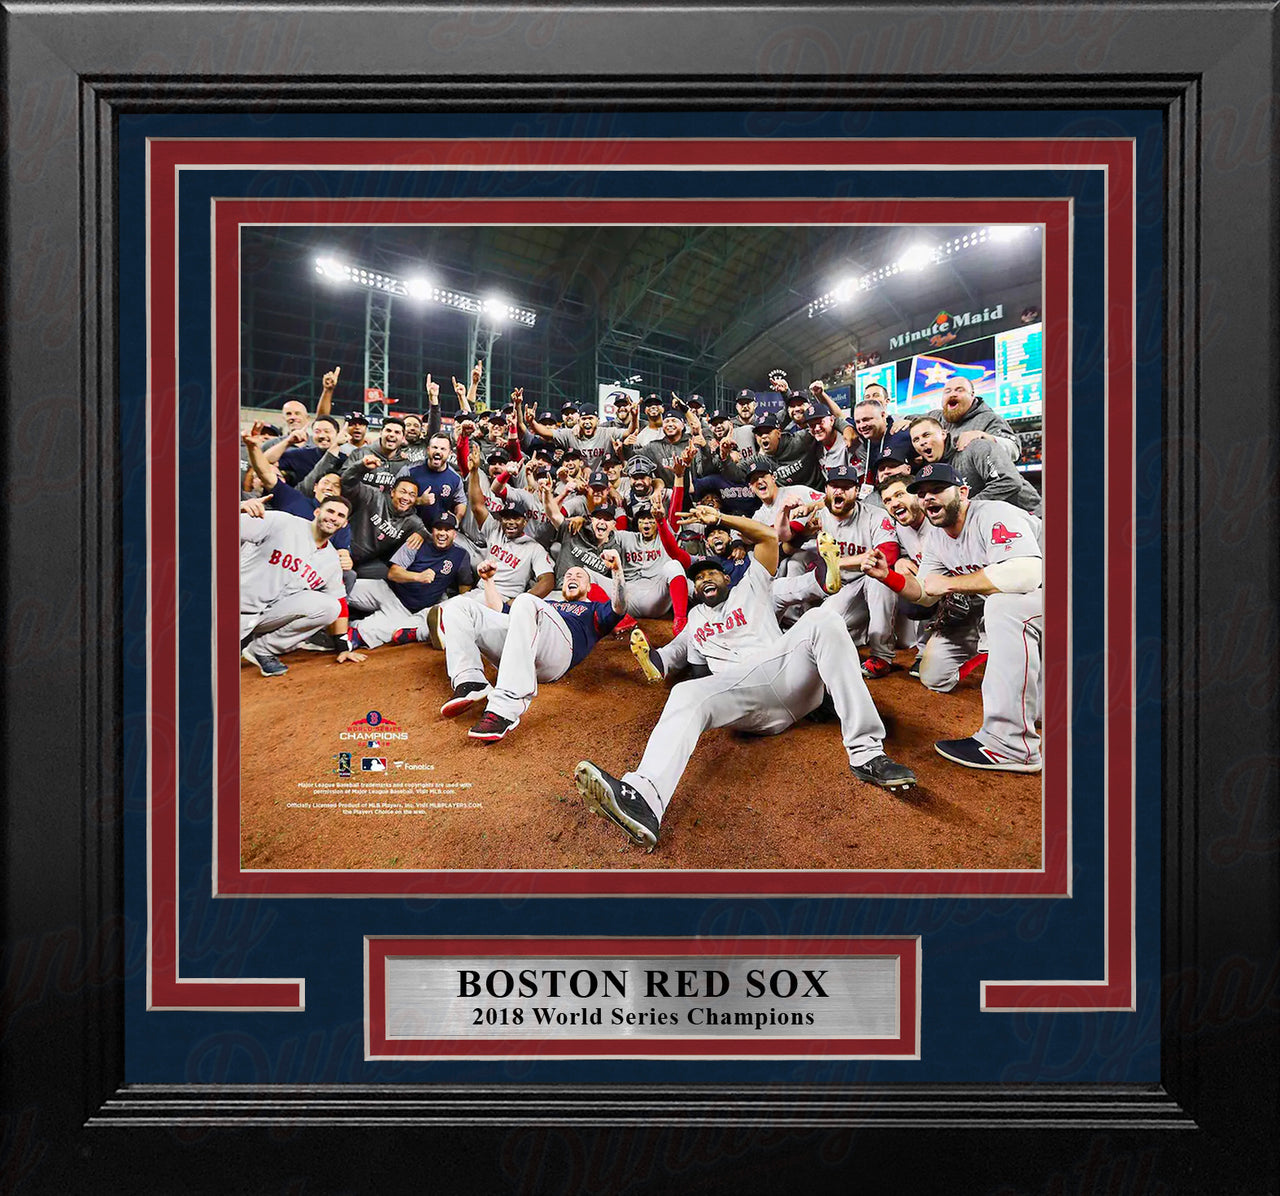 Boston Red Sox 2018 World Series Champions Team Celebration 8" x 10" Framed Baseball Photo - Dynasty Sports & Framing 